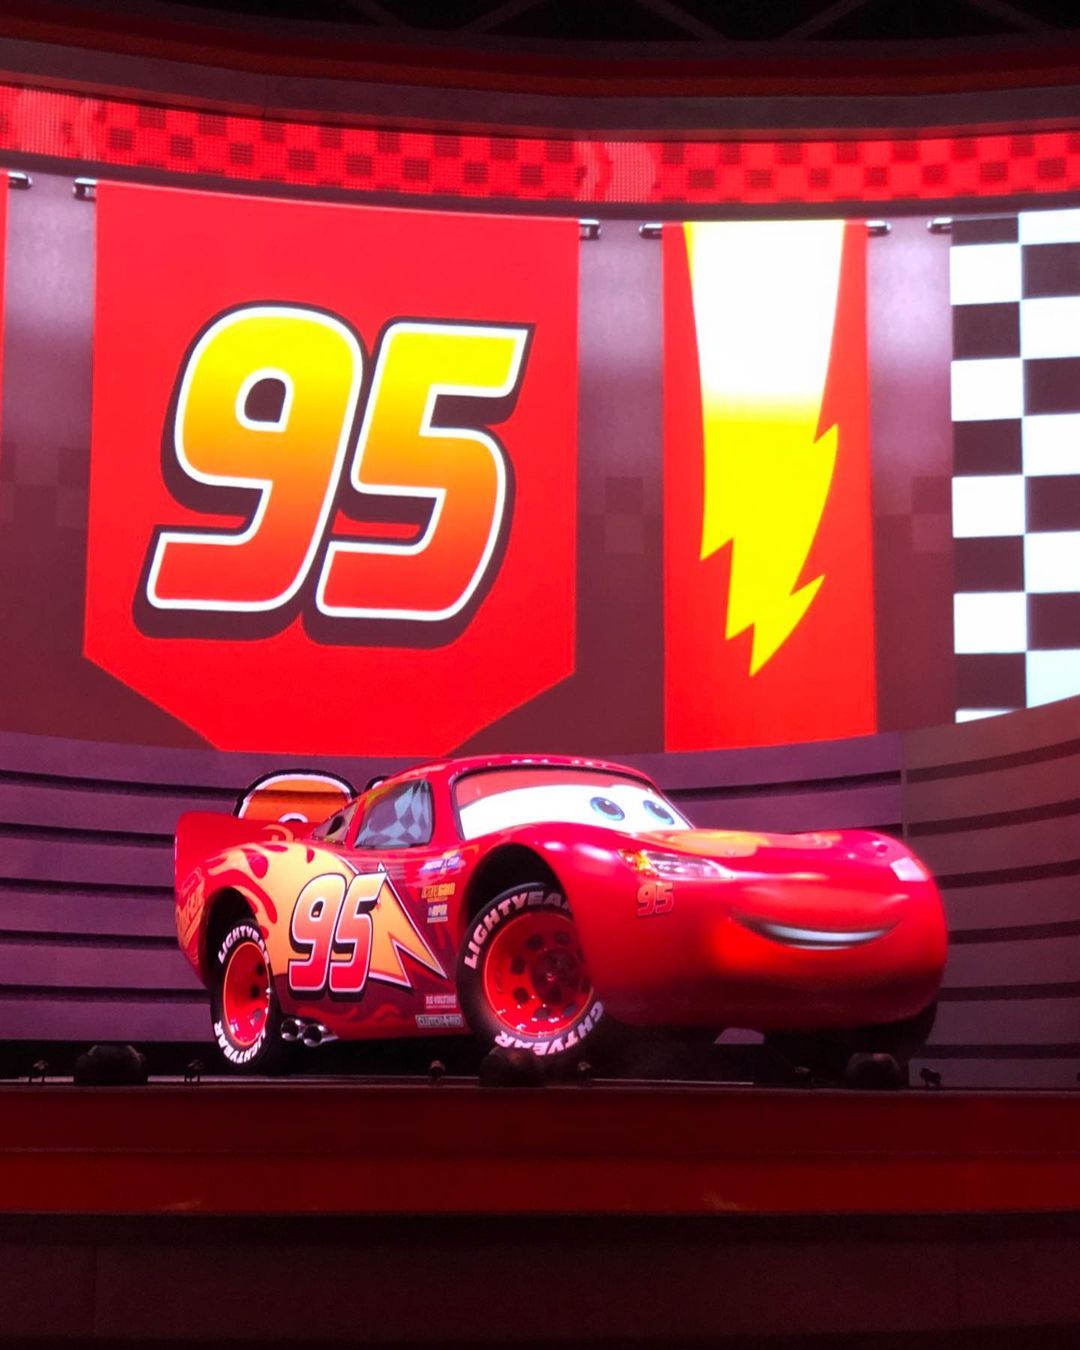 Lightning McQueen's Racing Academy in Hollywood